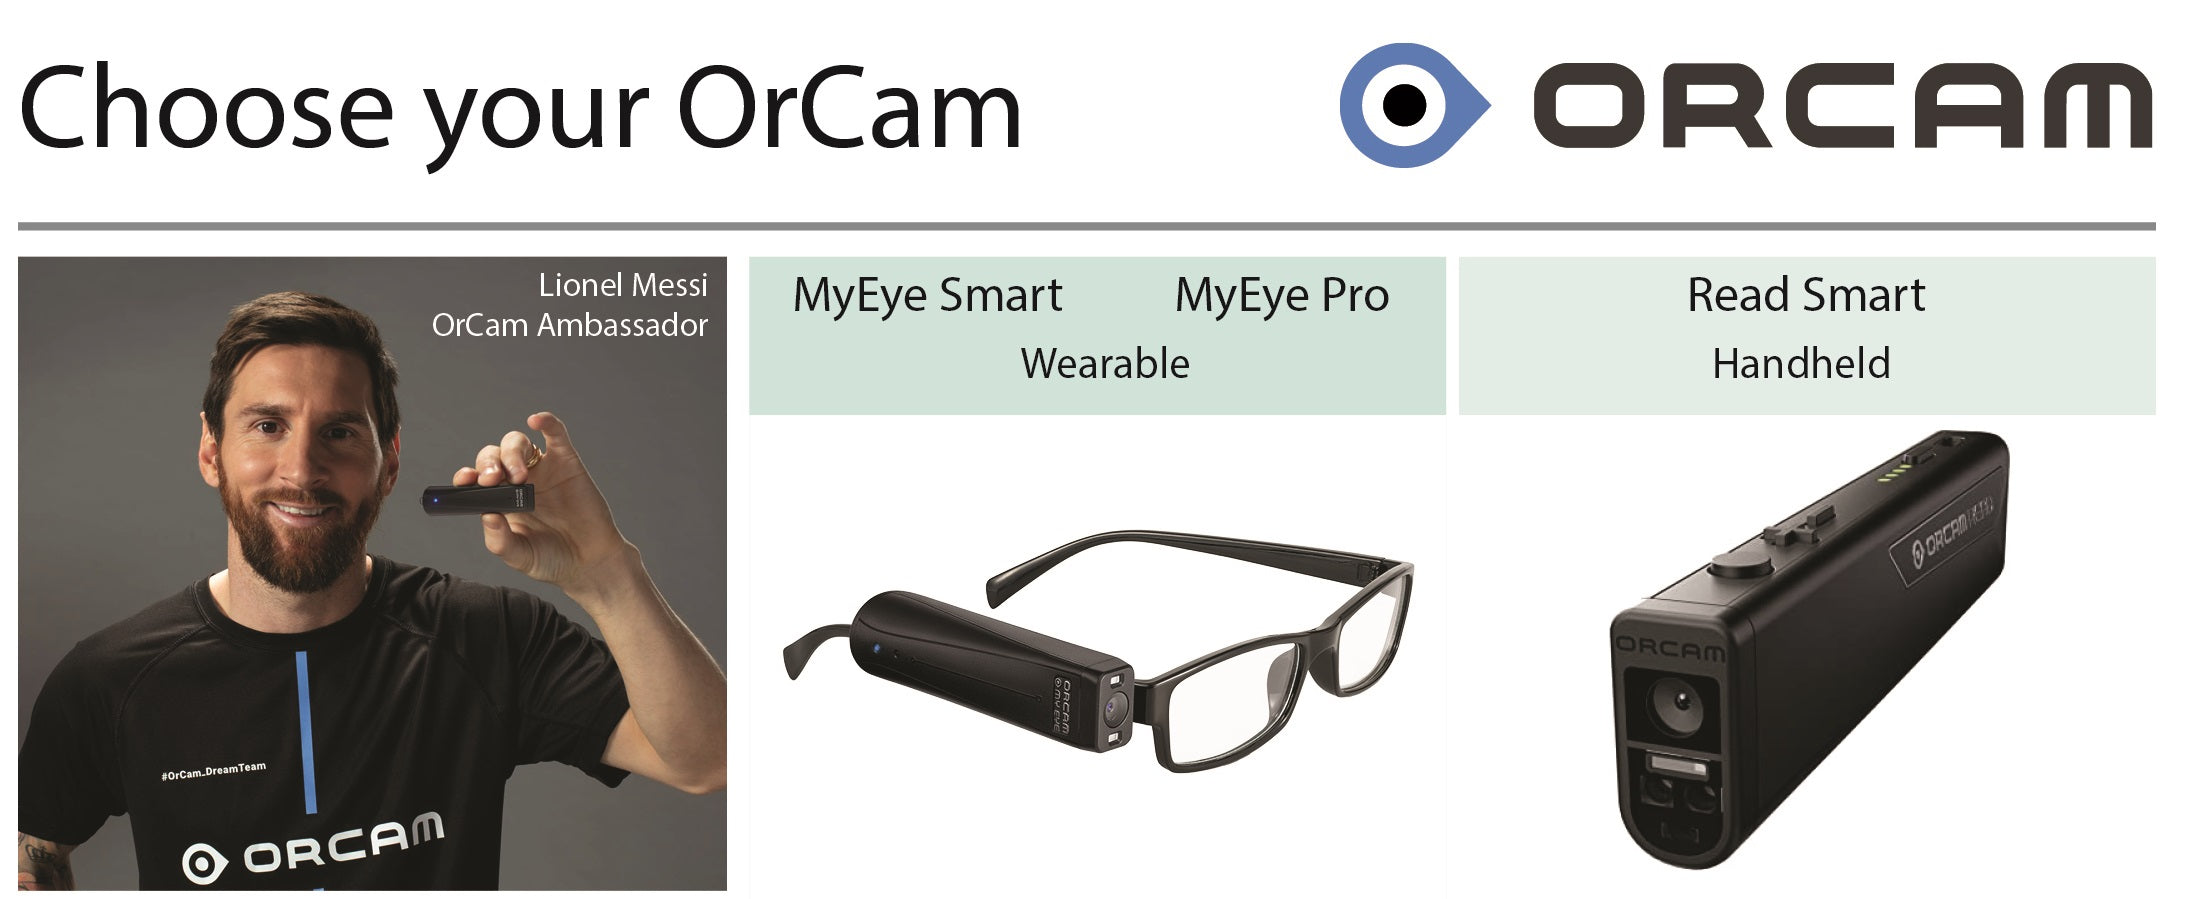 OrCam Comparison: Wearables - OrCam MyEye Smart and OrCam MyEye Pro; Handheld - OrCam Read Smart